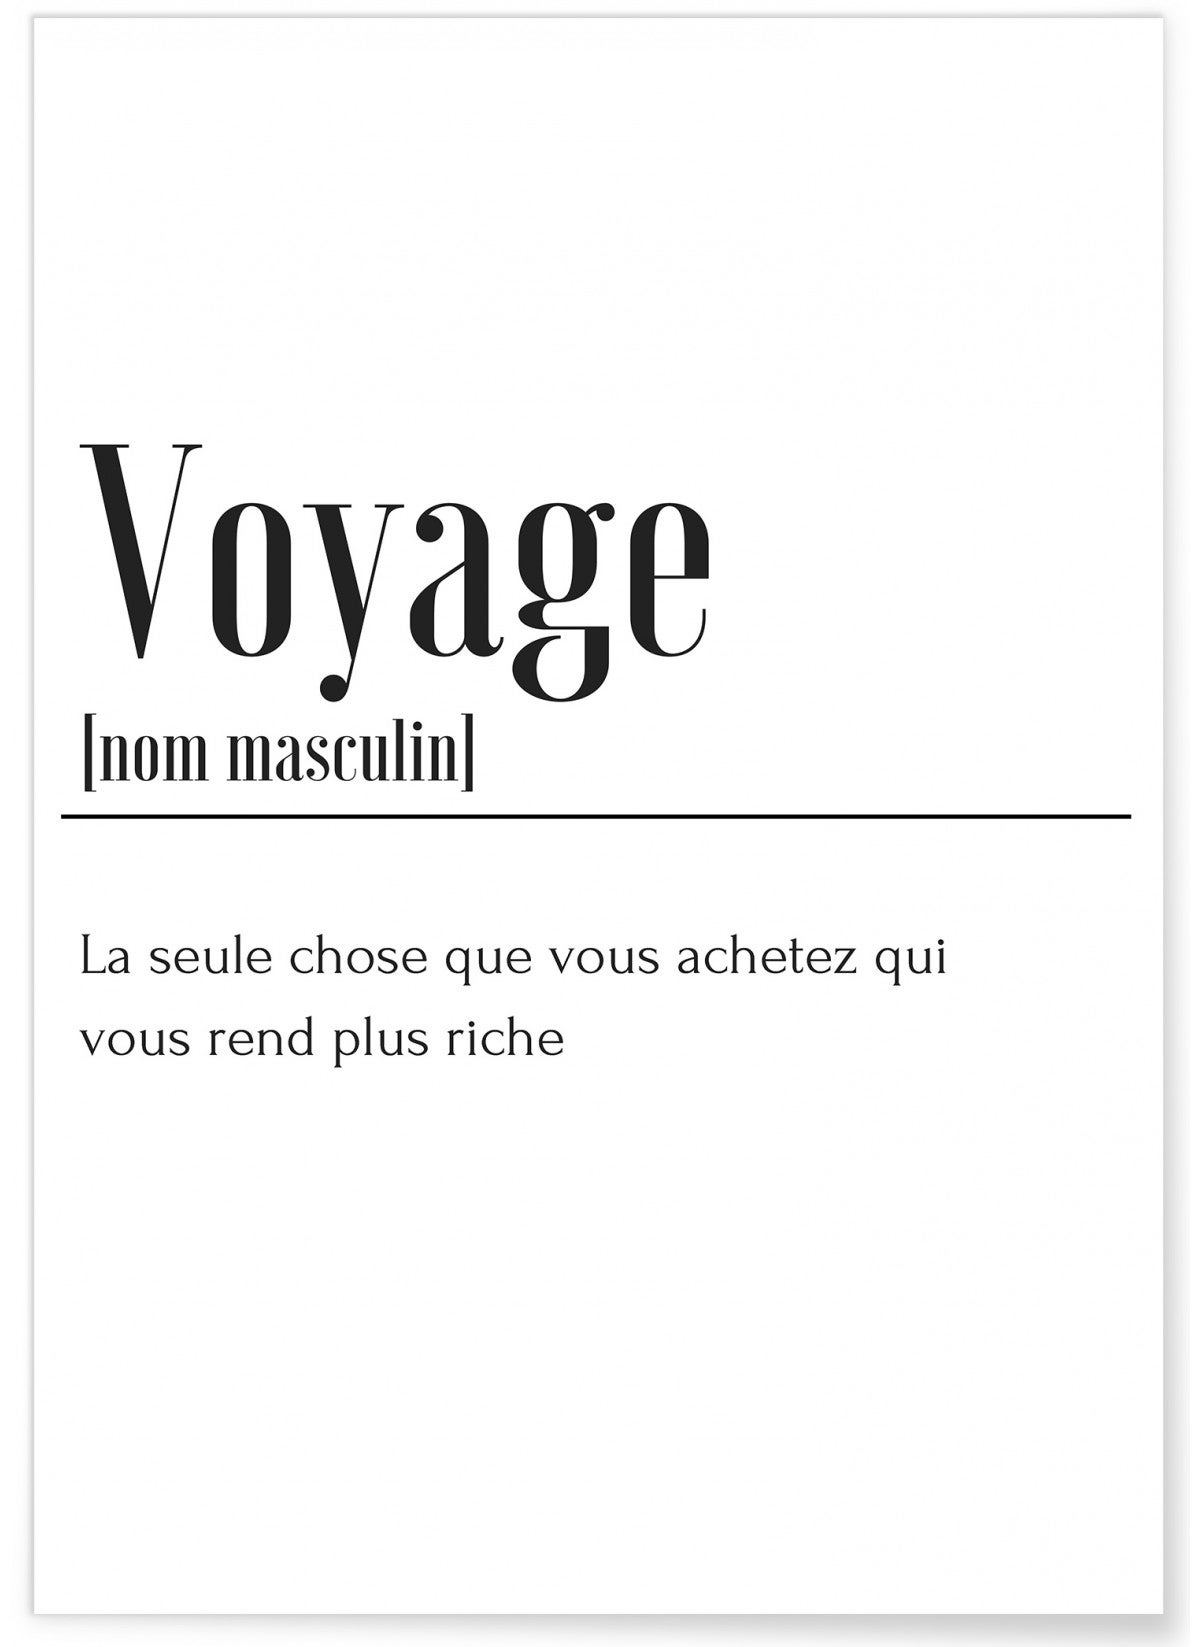 voyage definition francaise